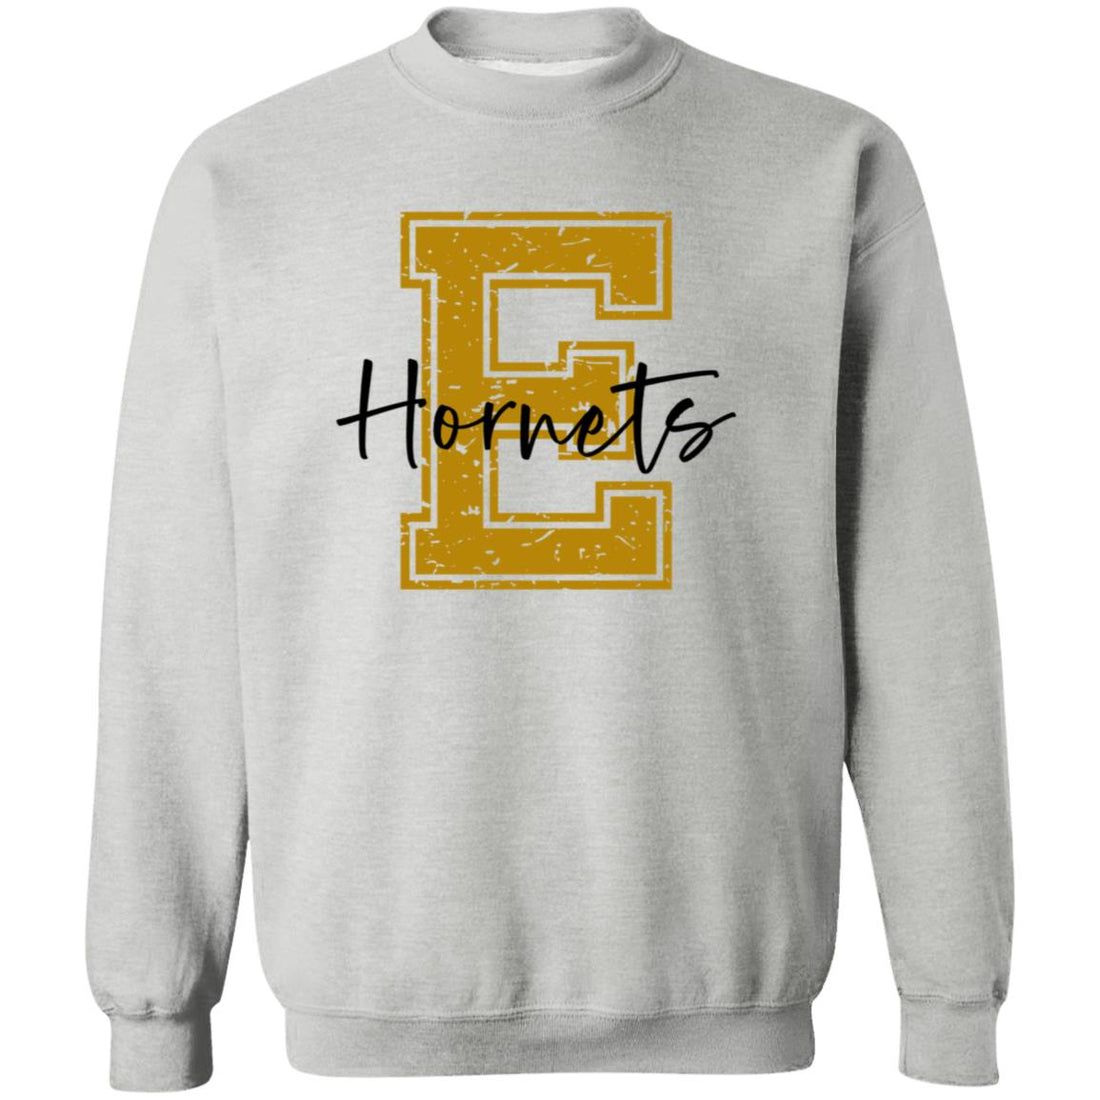 E Hornets Crewneck Pullover Sweatshirt - Sweatshirts - Positively Sassy - E Hornets Crewneck Pullover Sweatshirt